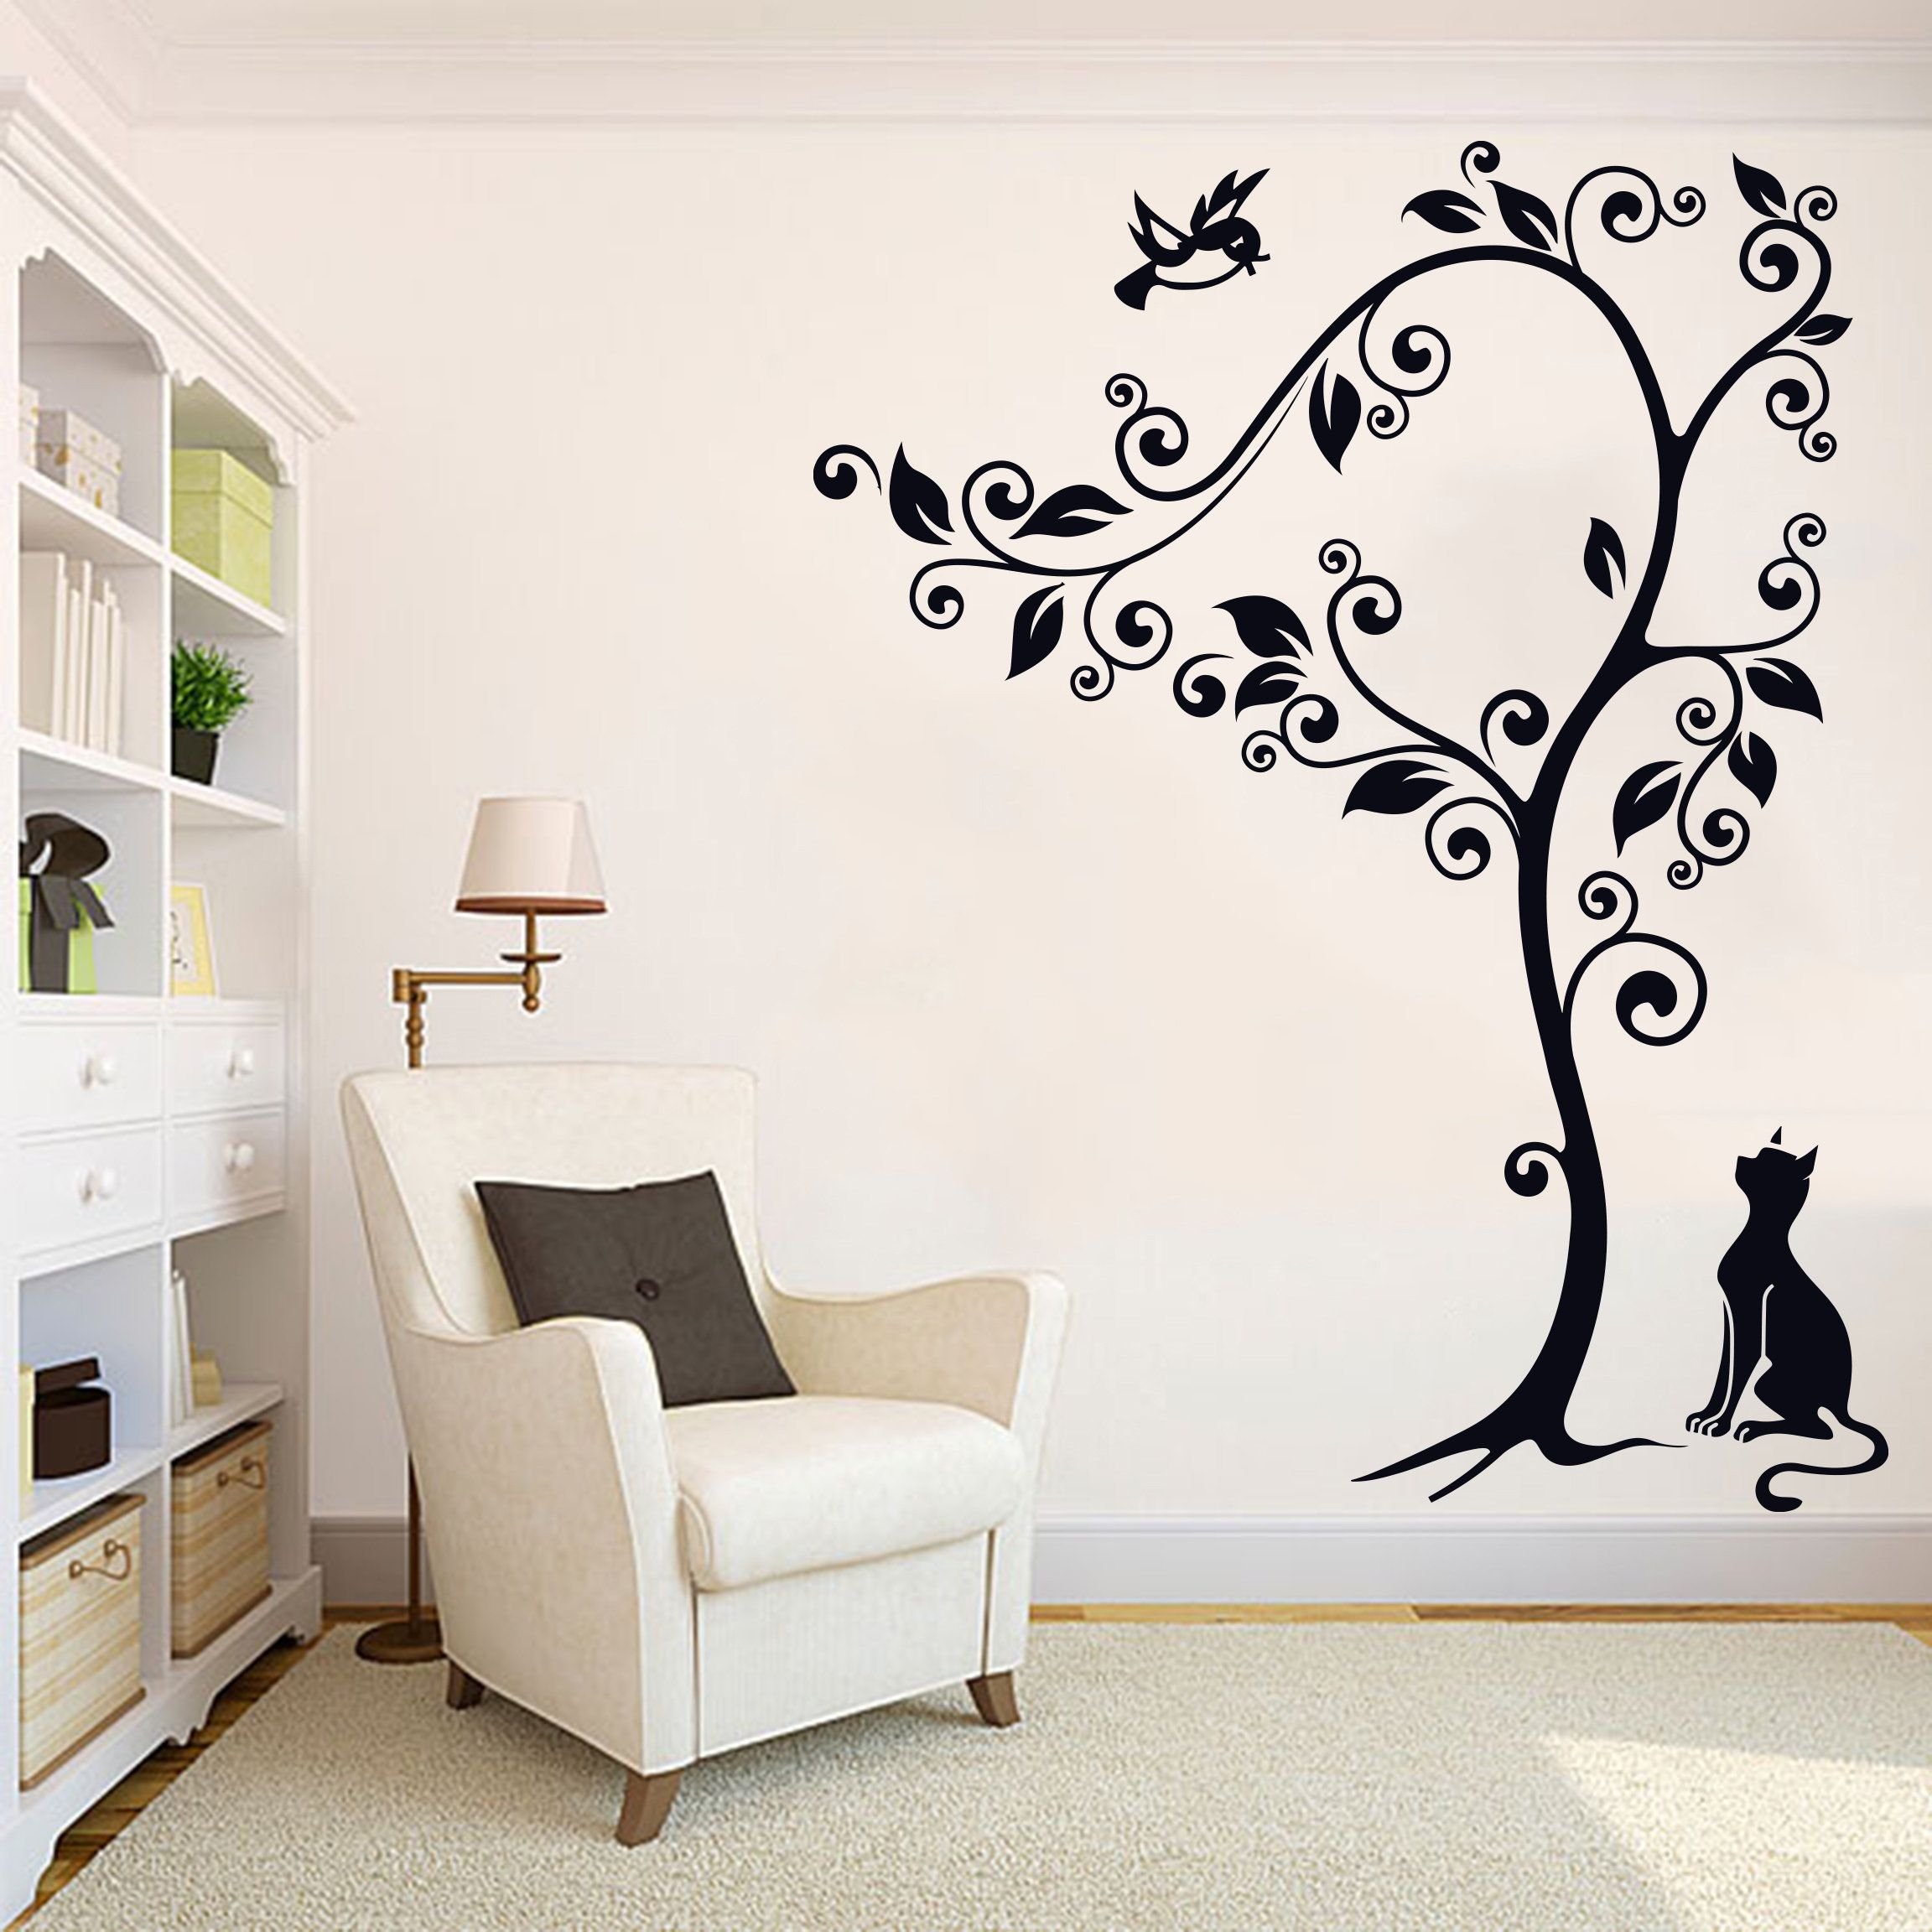 Рисунки на стене на кухонную тему | Идеи домашнего декора, Стена, Творческий декор